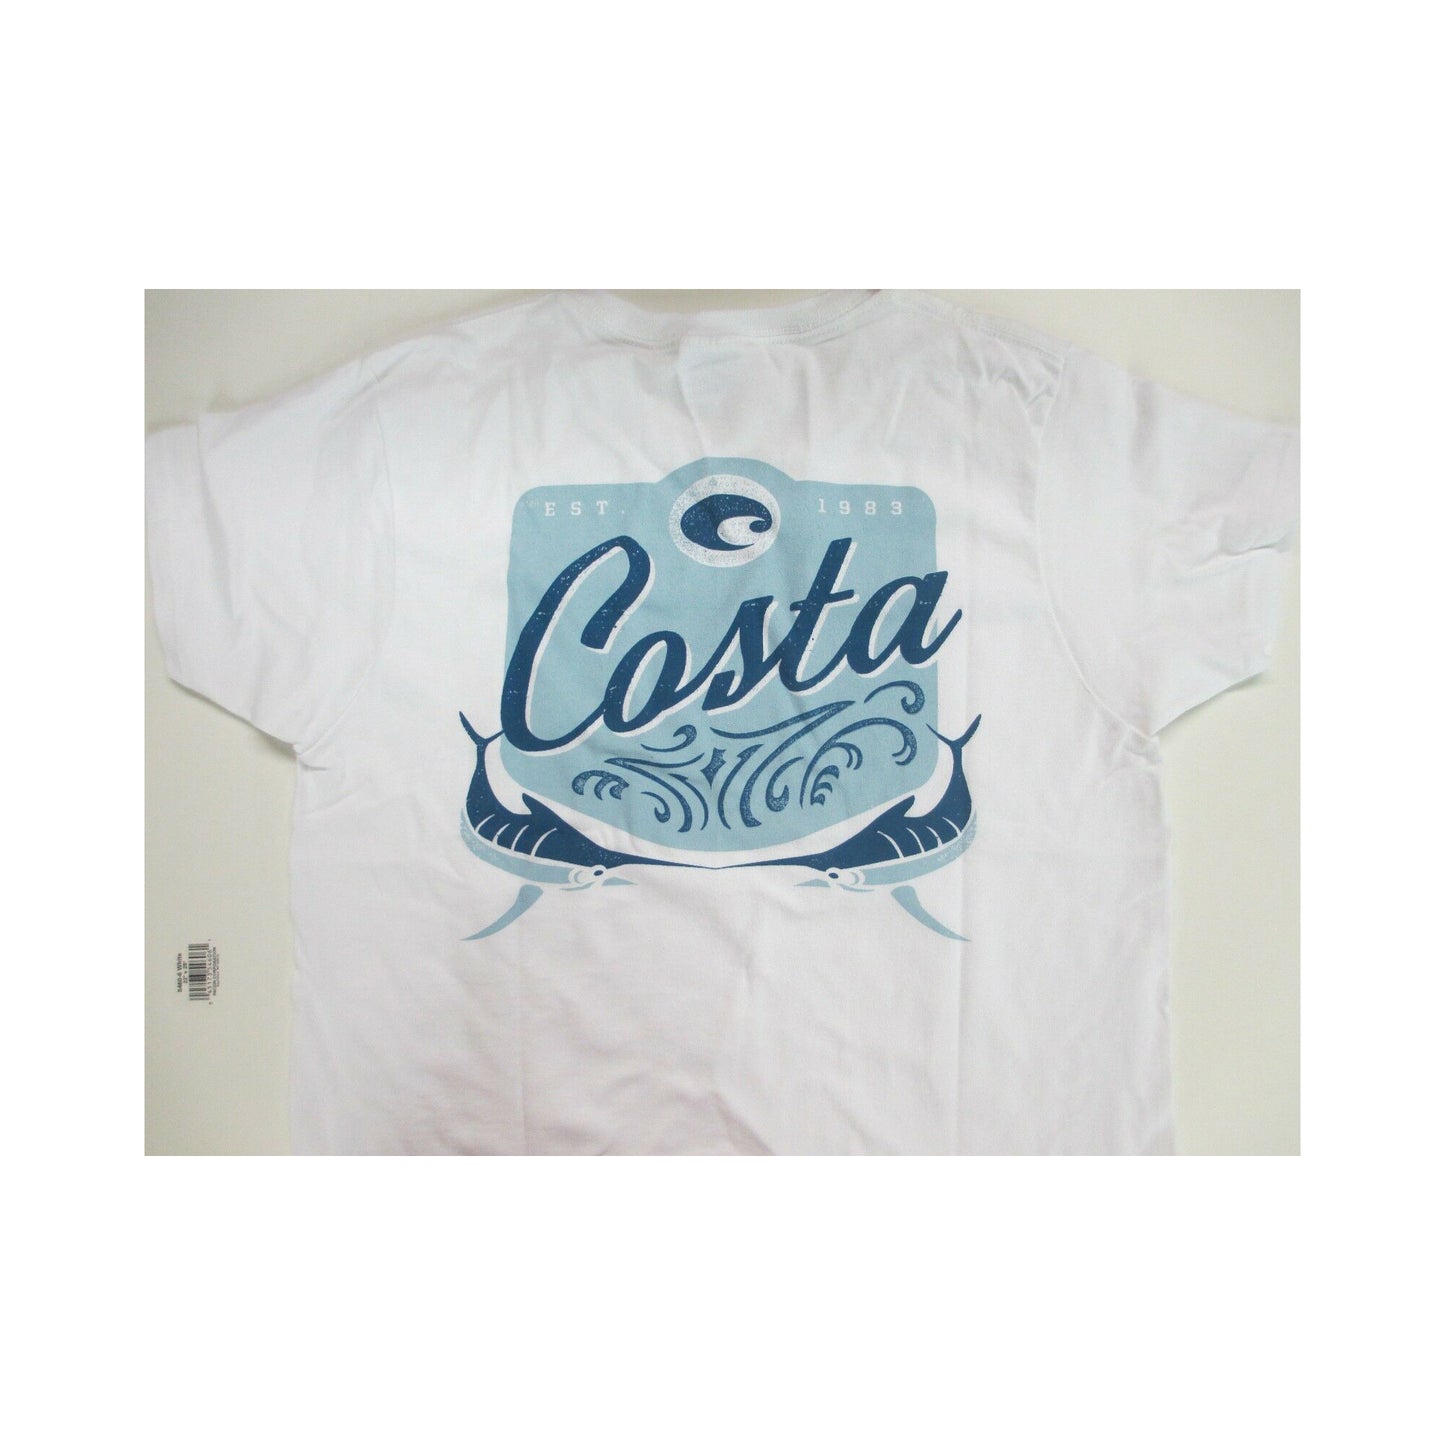 New Authentic Costa Short Sleeve T-Shirt Blue Horizon White Small